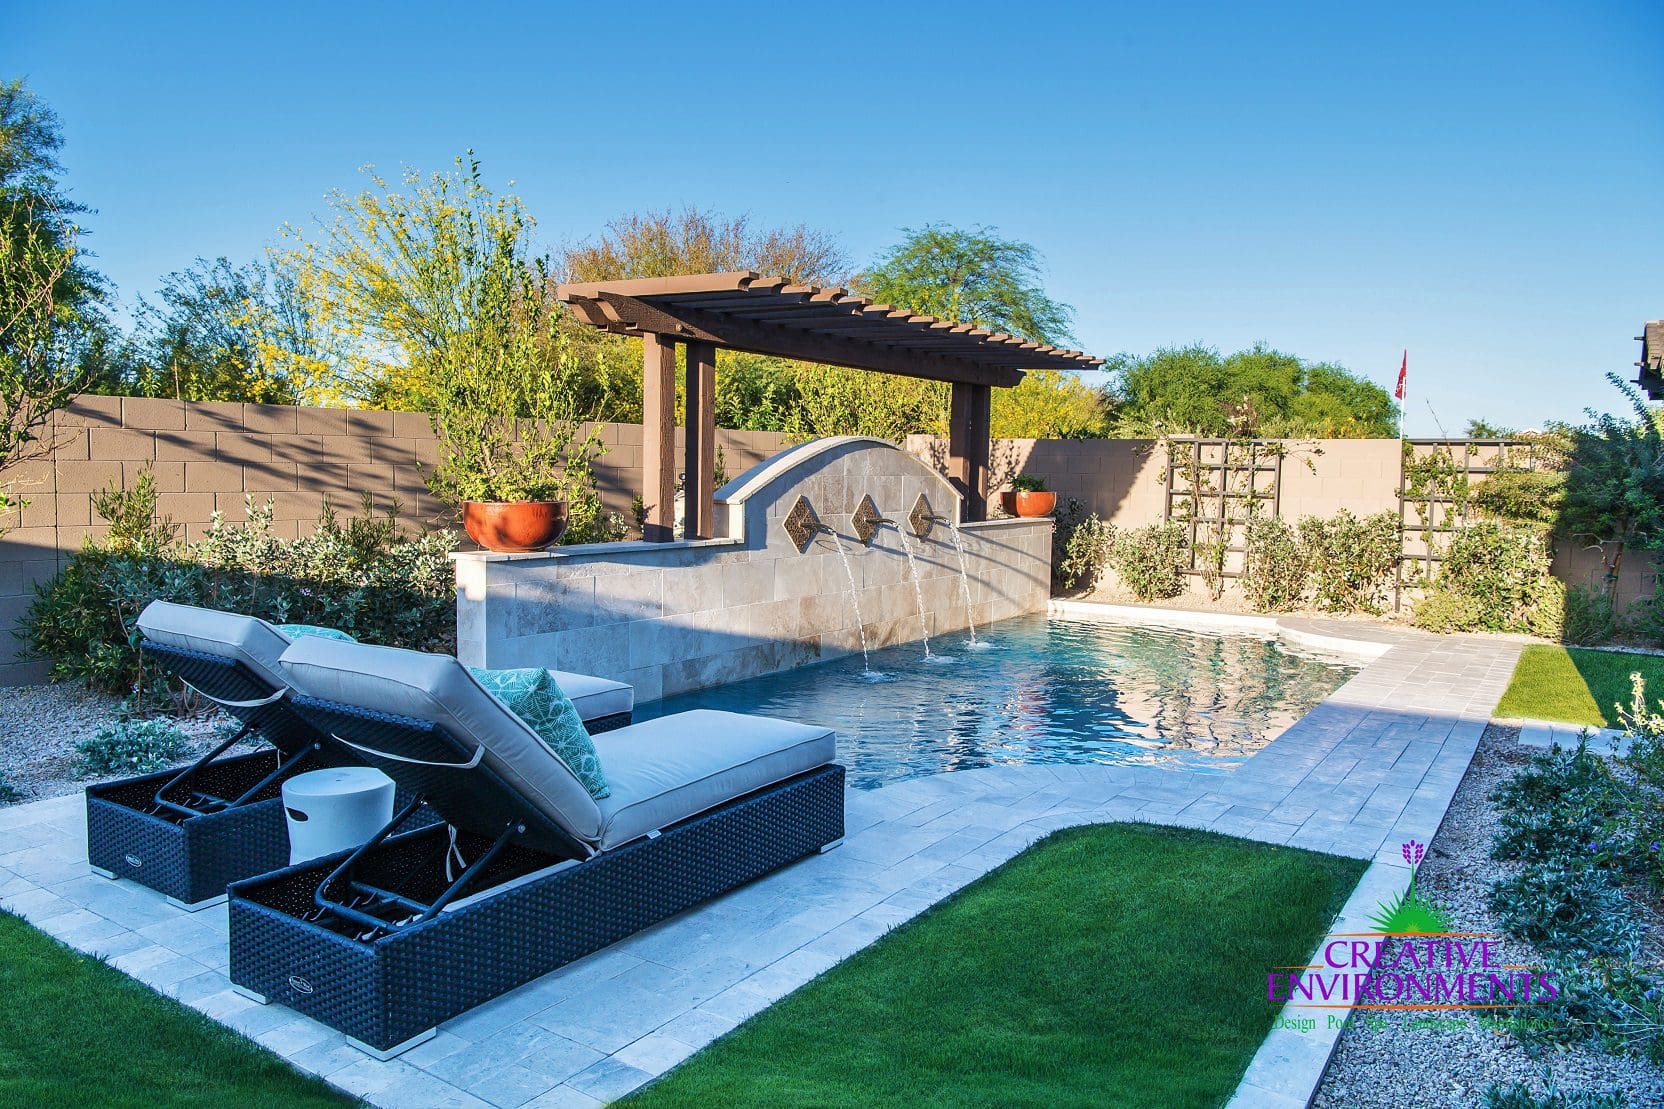 The Top 9 Pool Builders In Arizona In 2021 Ratings Reviews California Pools Landscape